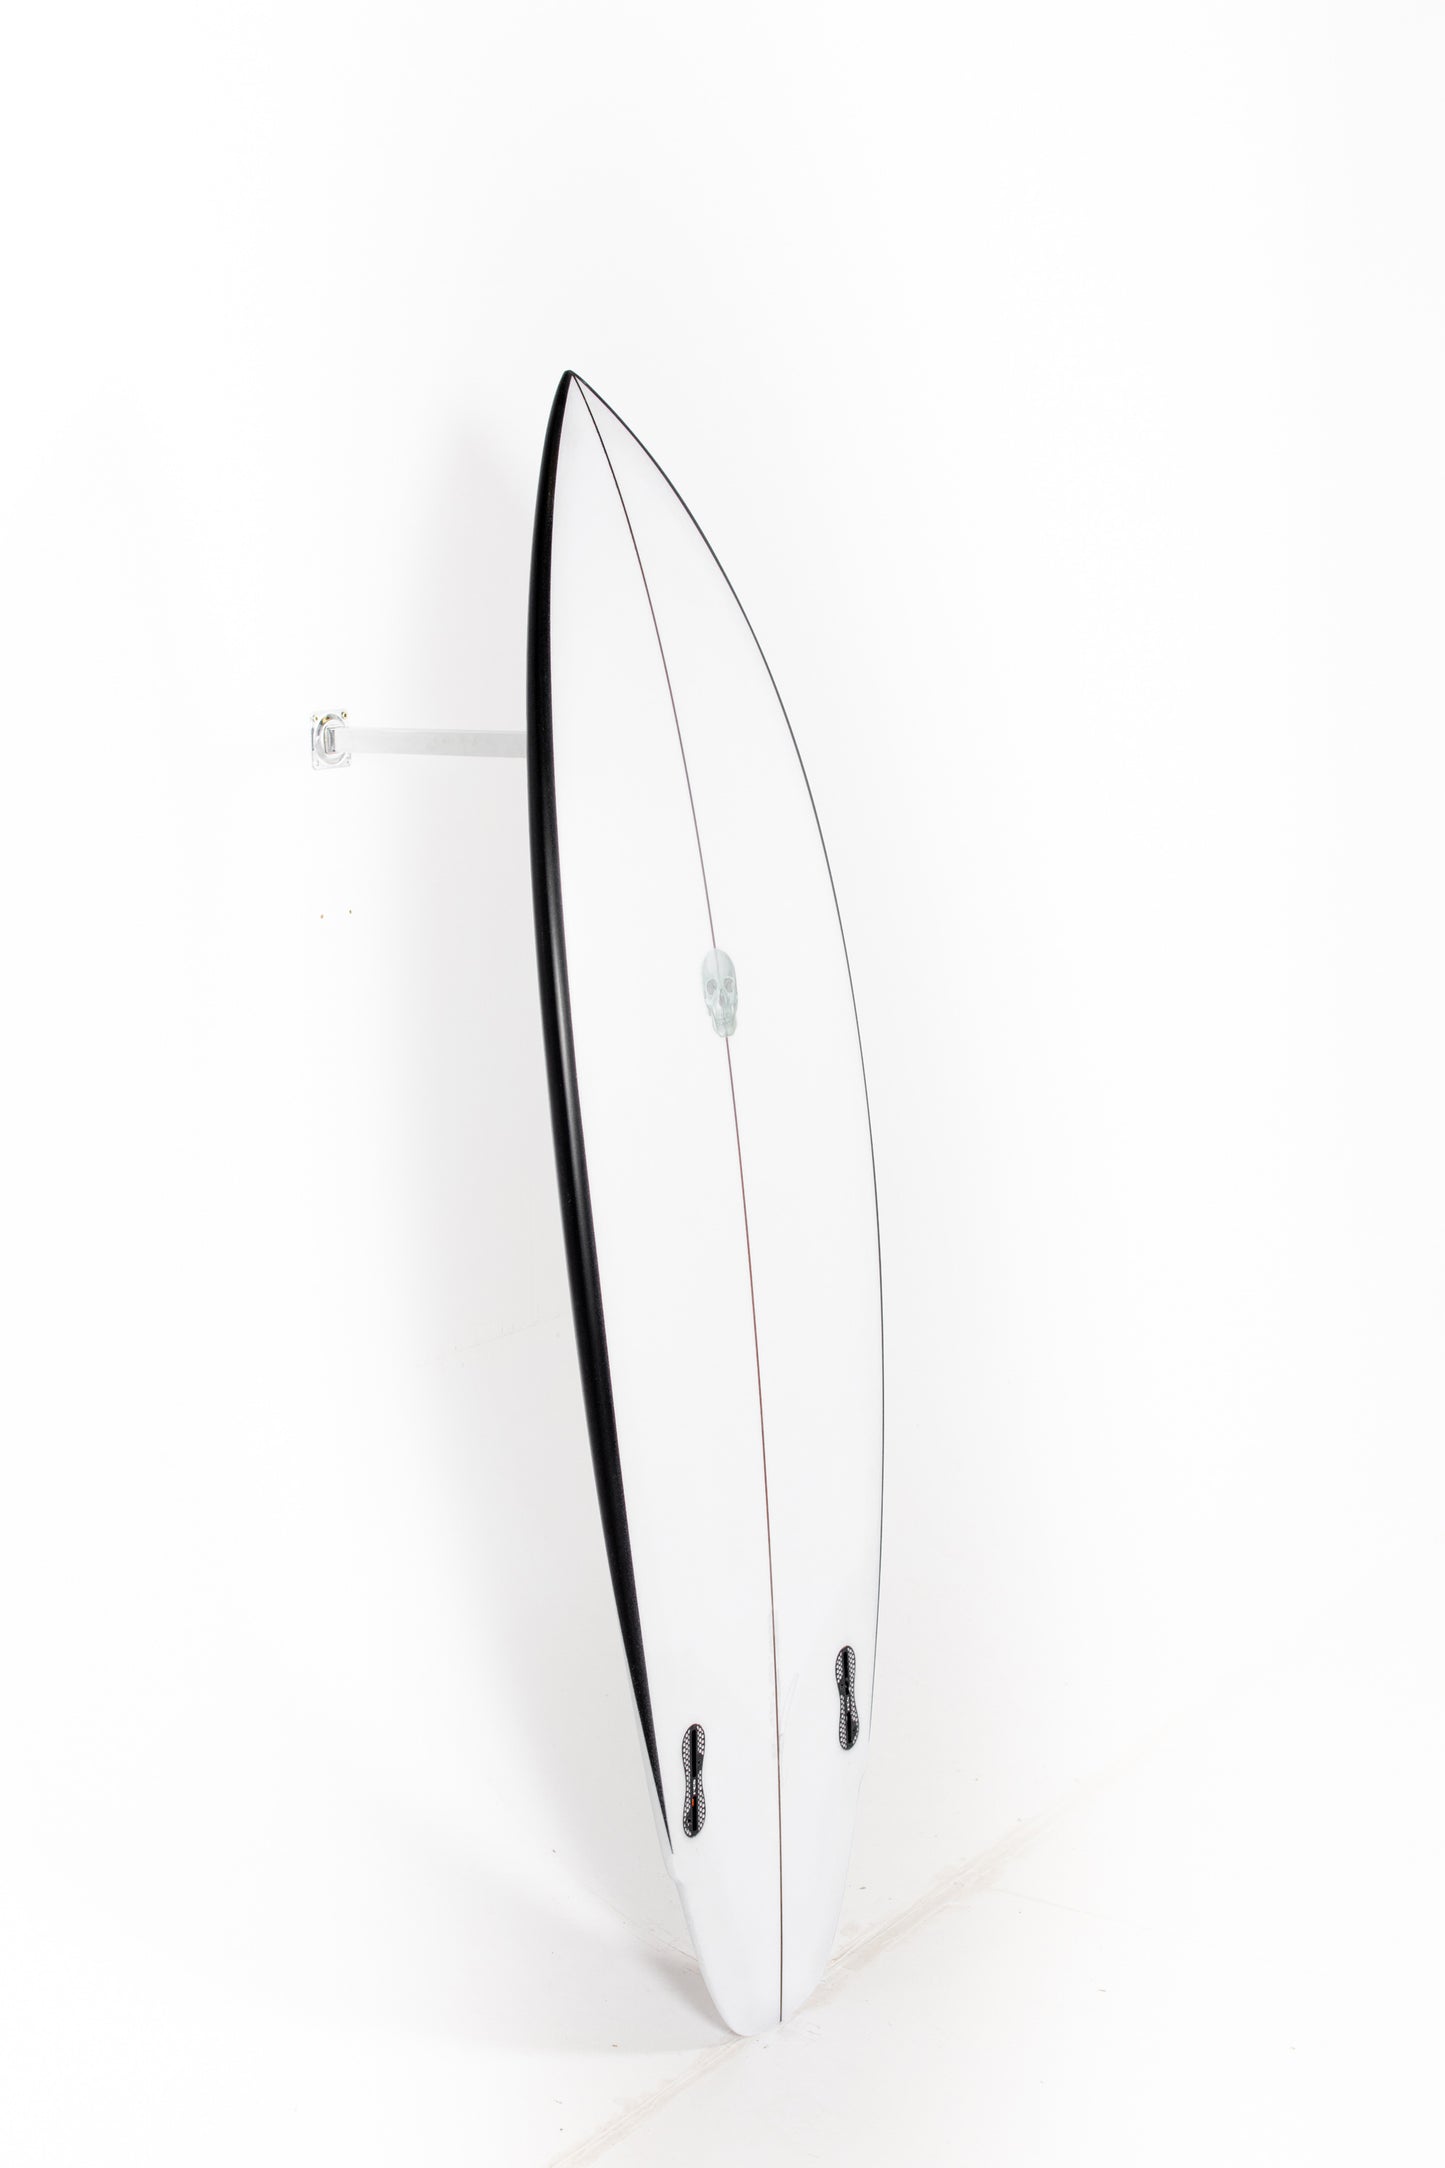 
                  
                    Pukas Surf Shop - Christenson Surfboards - LANE SPLITTER - 5'4" x 19 3/8 x 2 5/16 - CX03372
                  
                